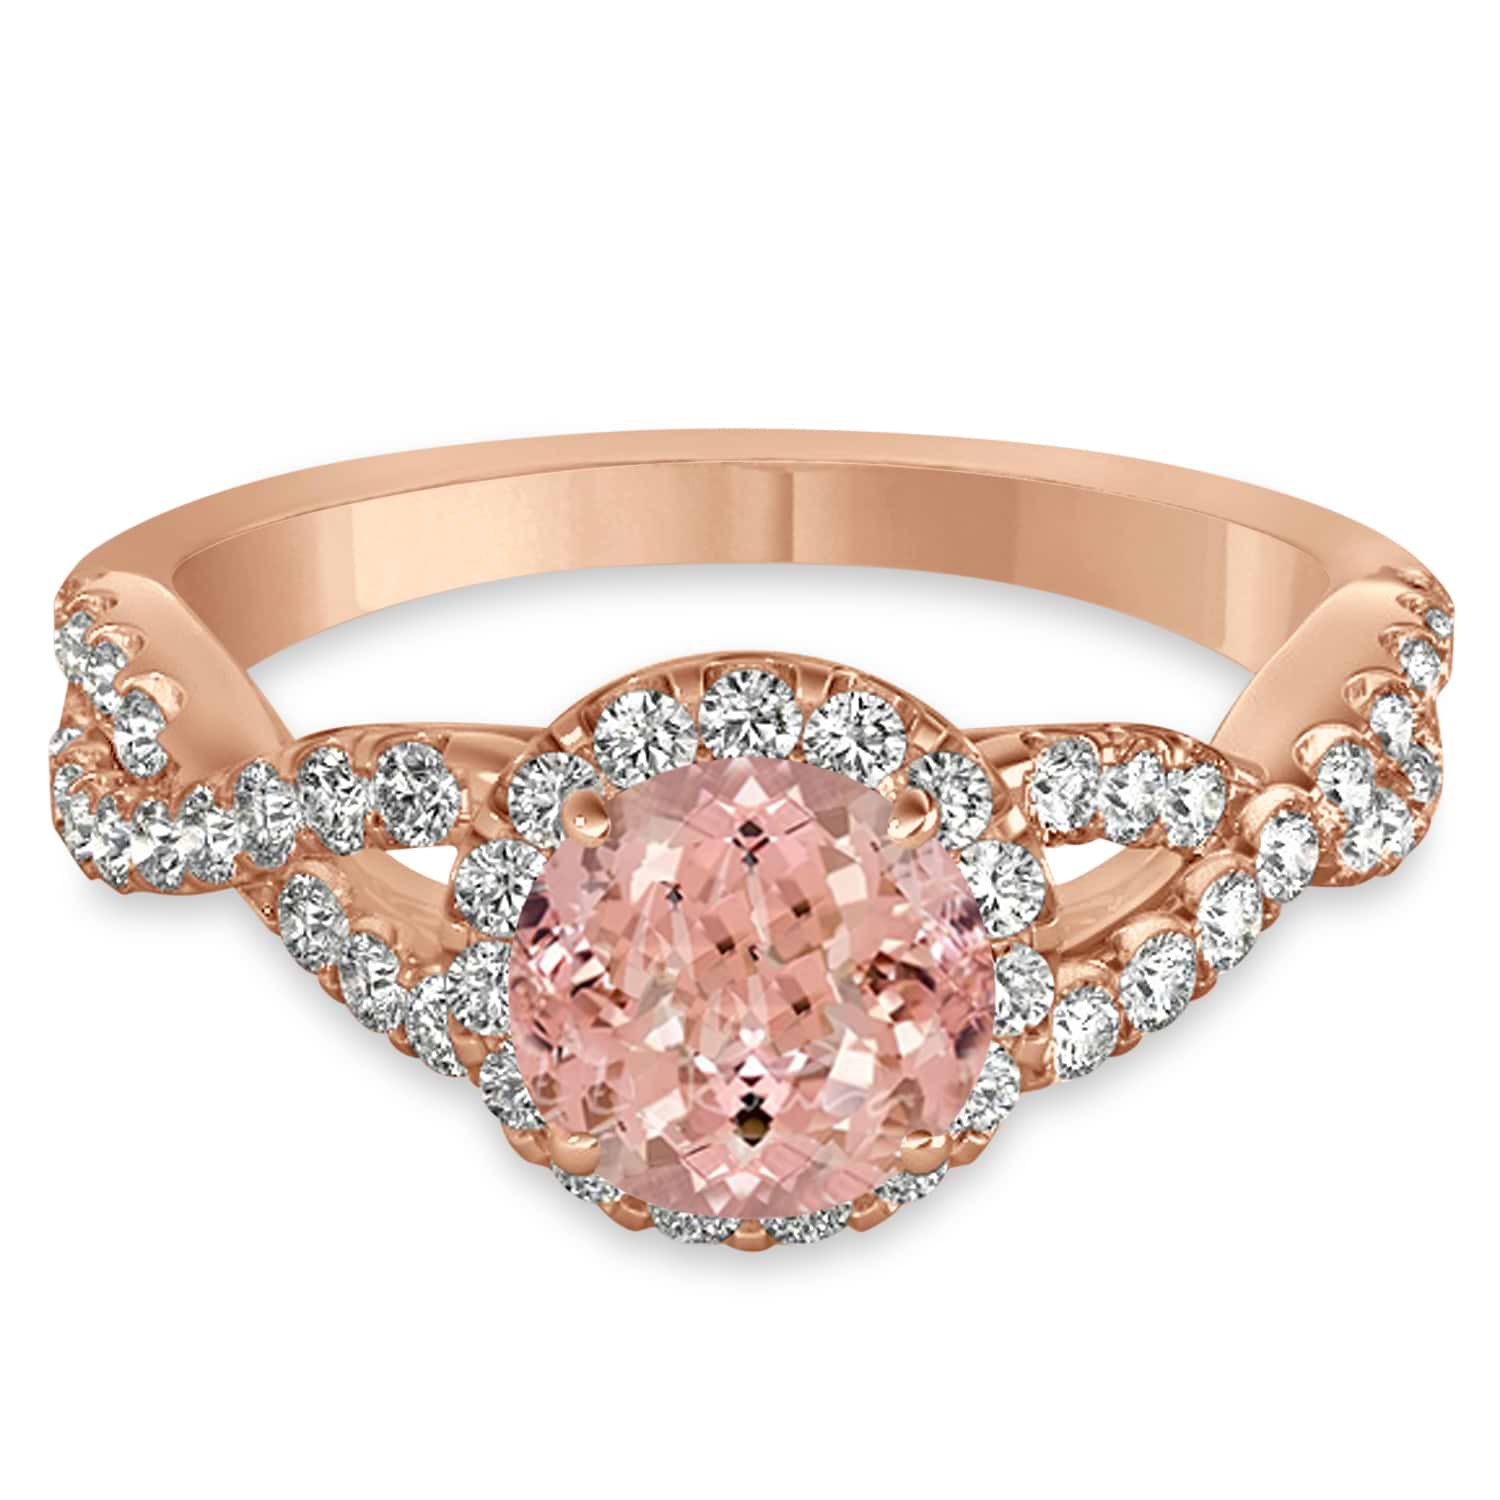 Morganite & Diamond Twisted Engagement Ring 14k Rose Gold 1.27ct